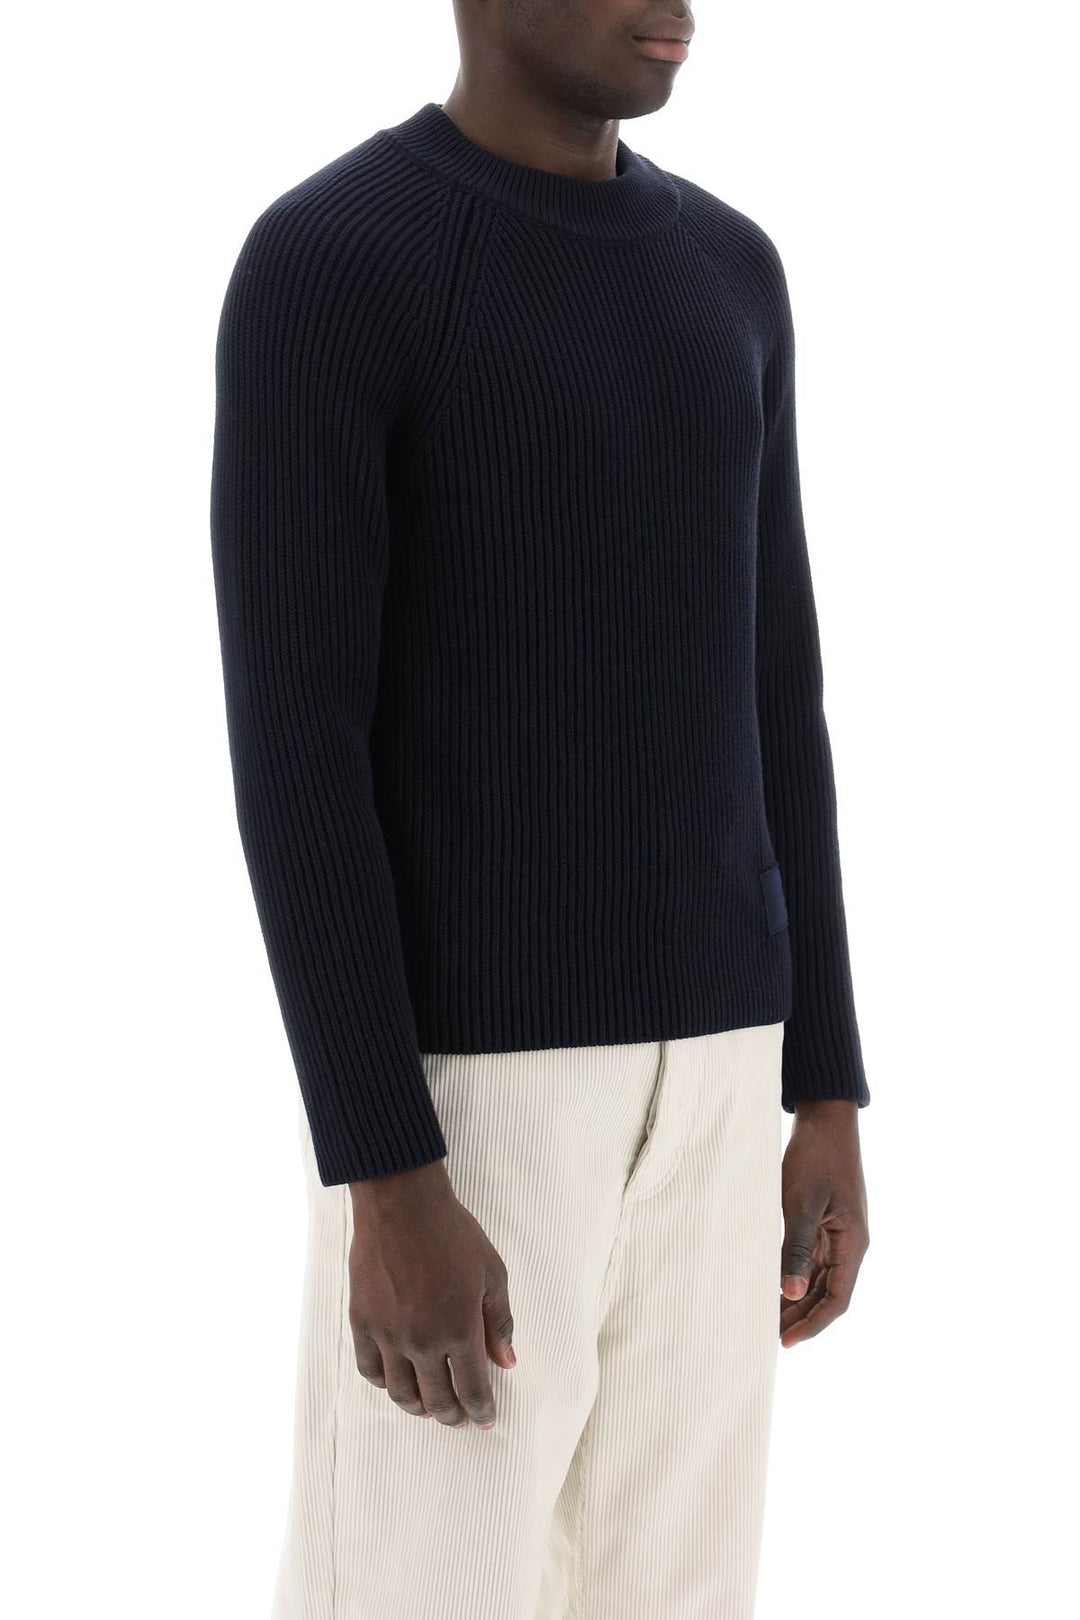 Ami Alexandre Matiussi Cotton Wool Crewneck Sweater   Blu